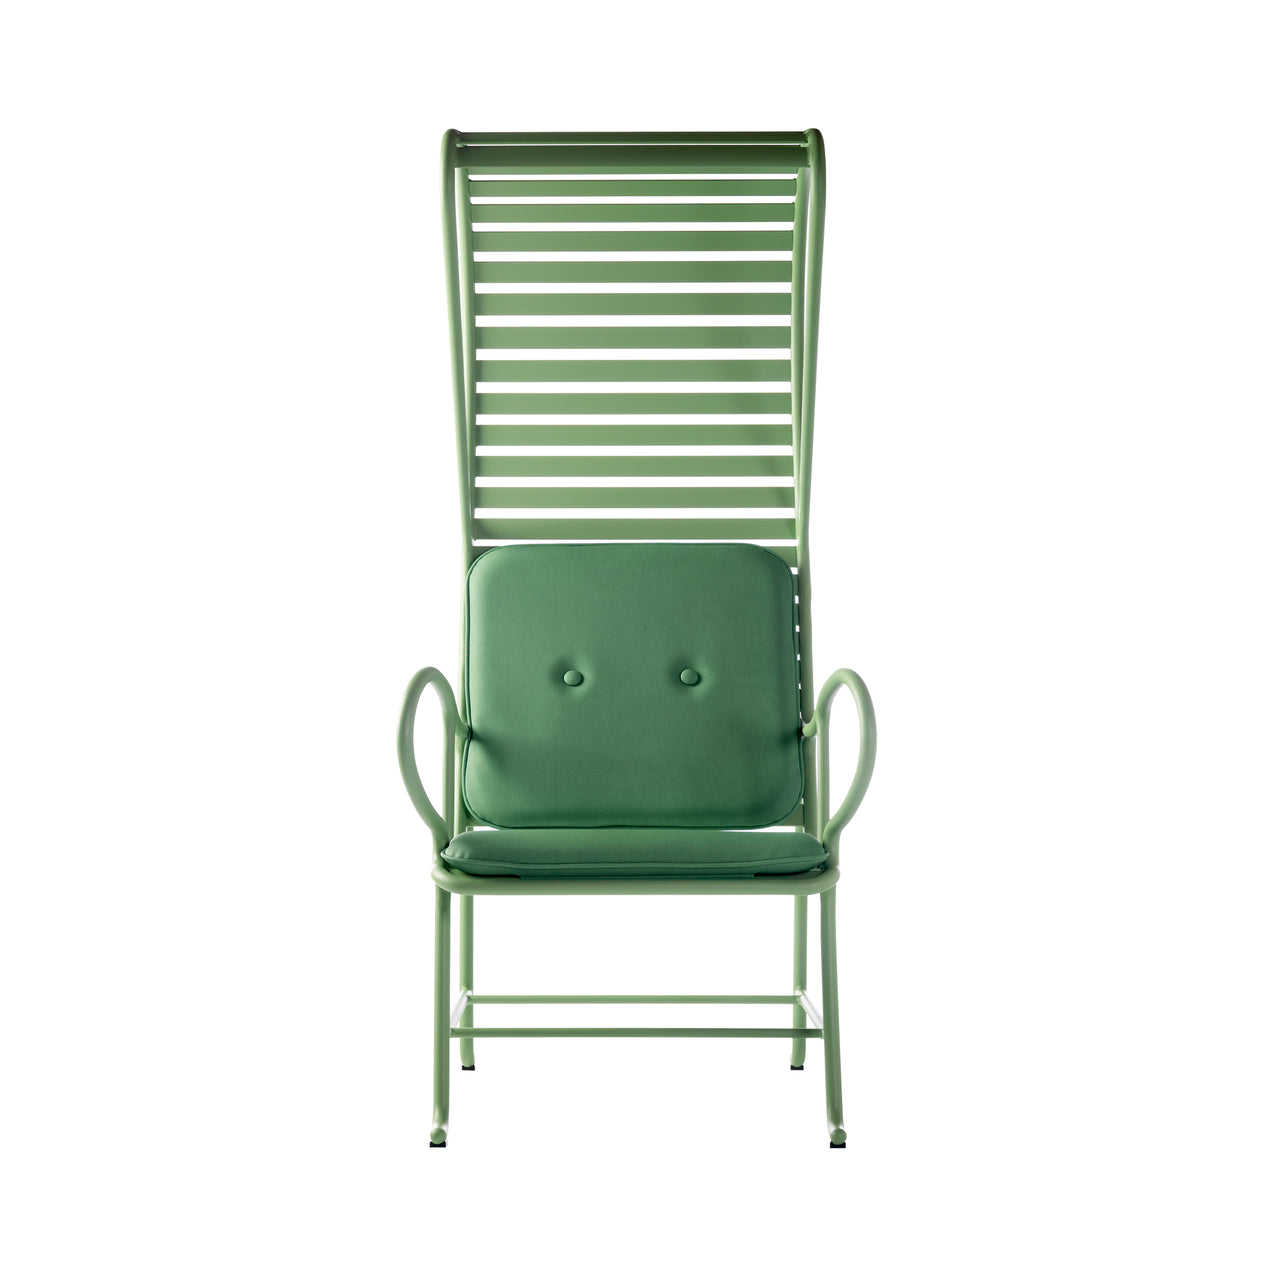 Gardenias Armchair Pergola: Outdoor + Green + With Cushion